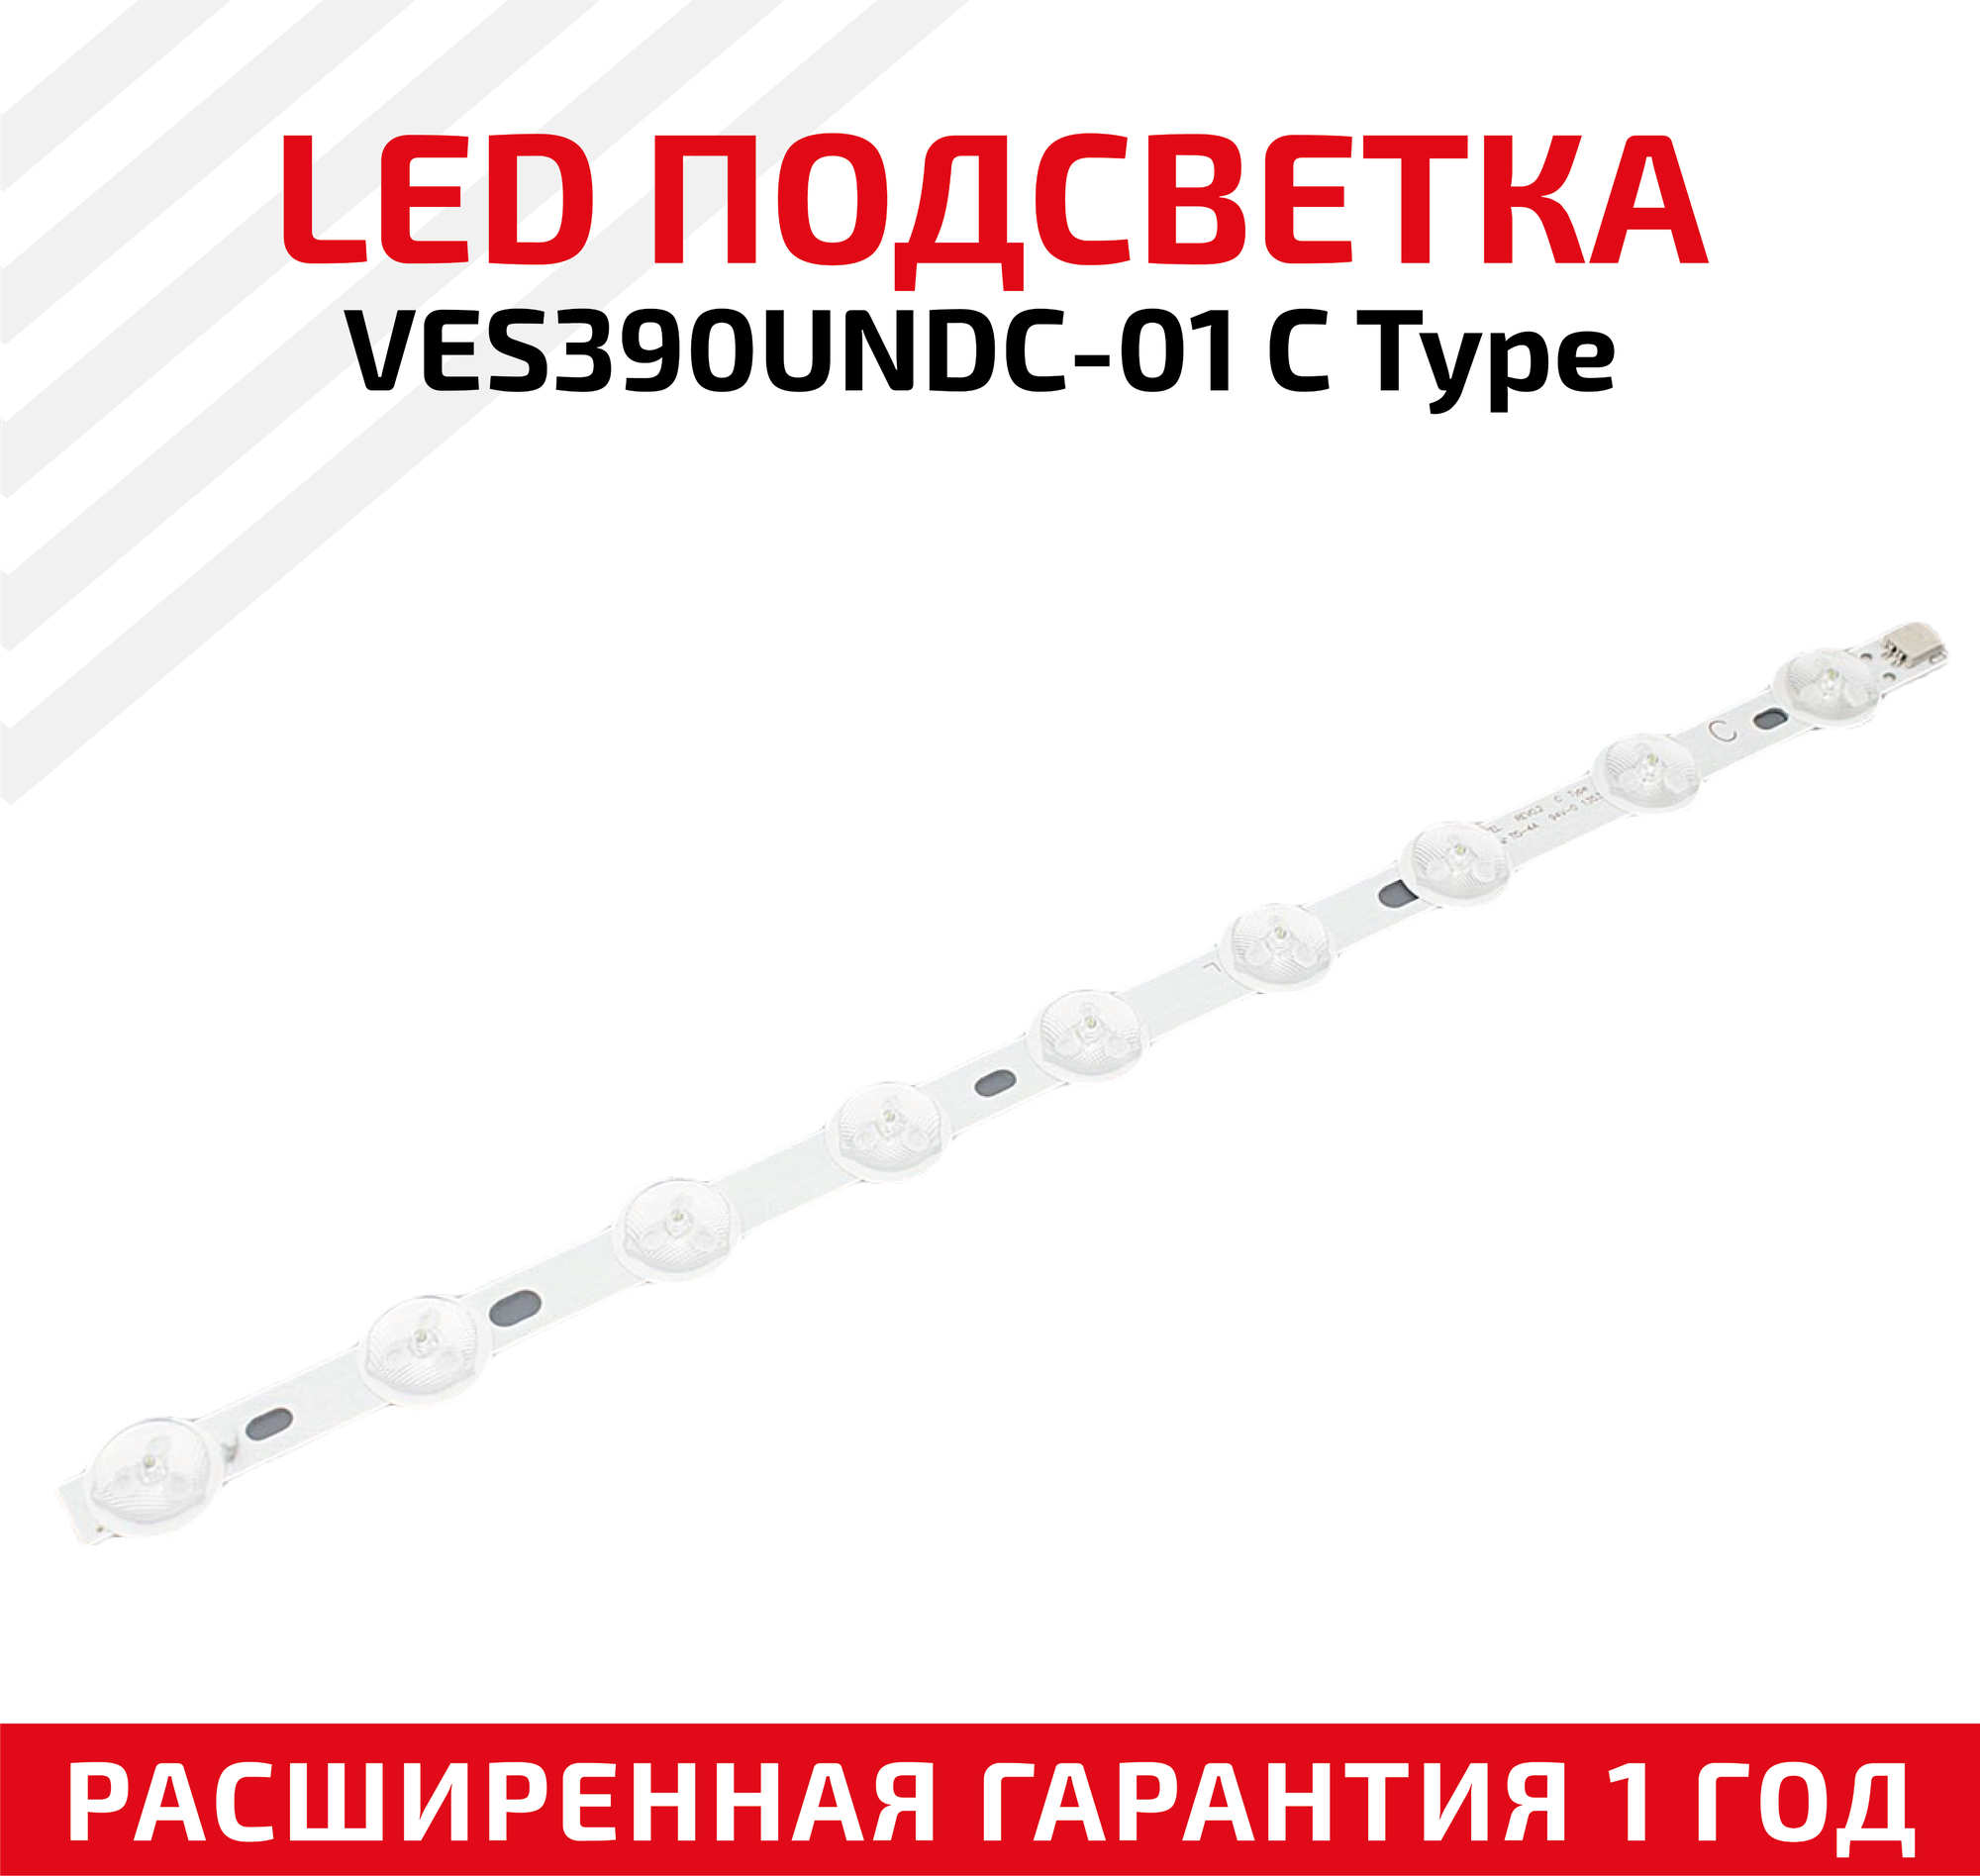 LED подсветка (светодиодная планка) для телевизора VES390UNDC-01 C-Type